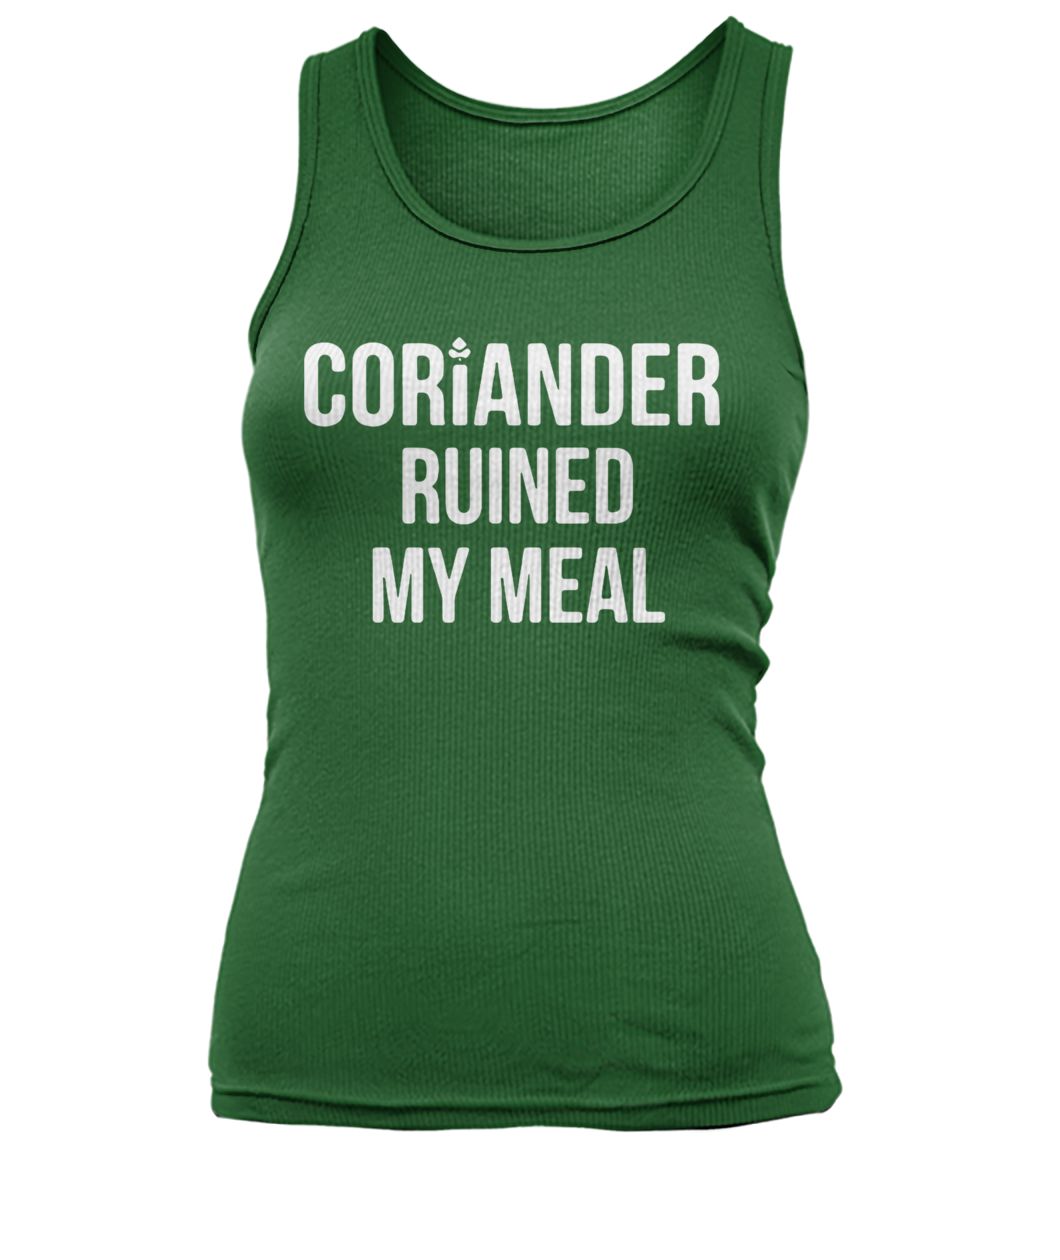 Coriander ruined my meal women's tank top